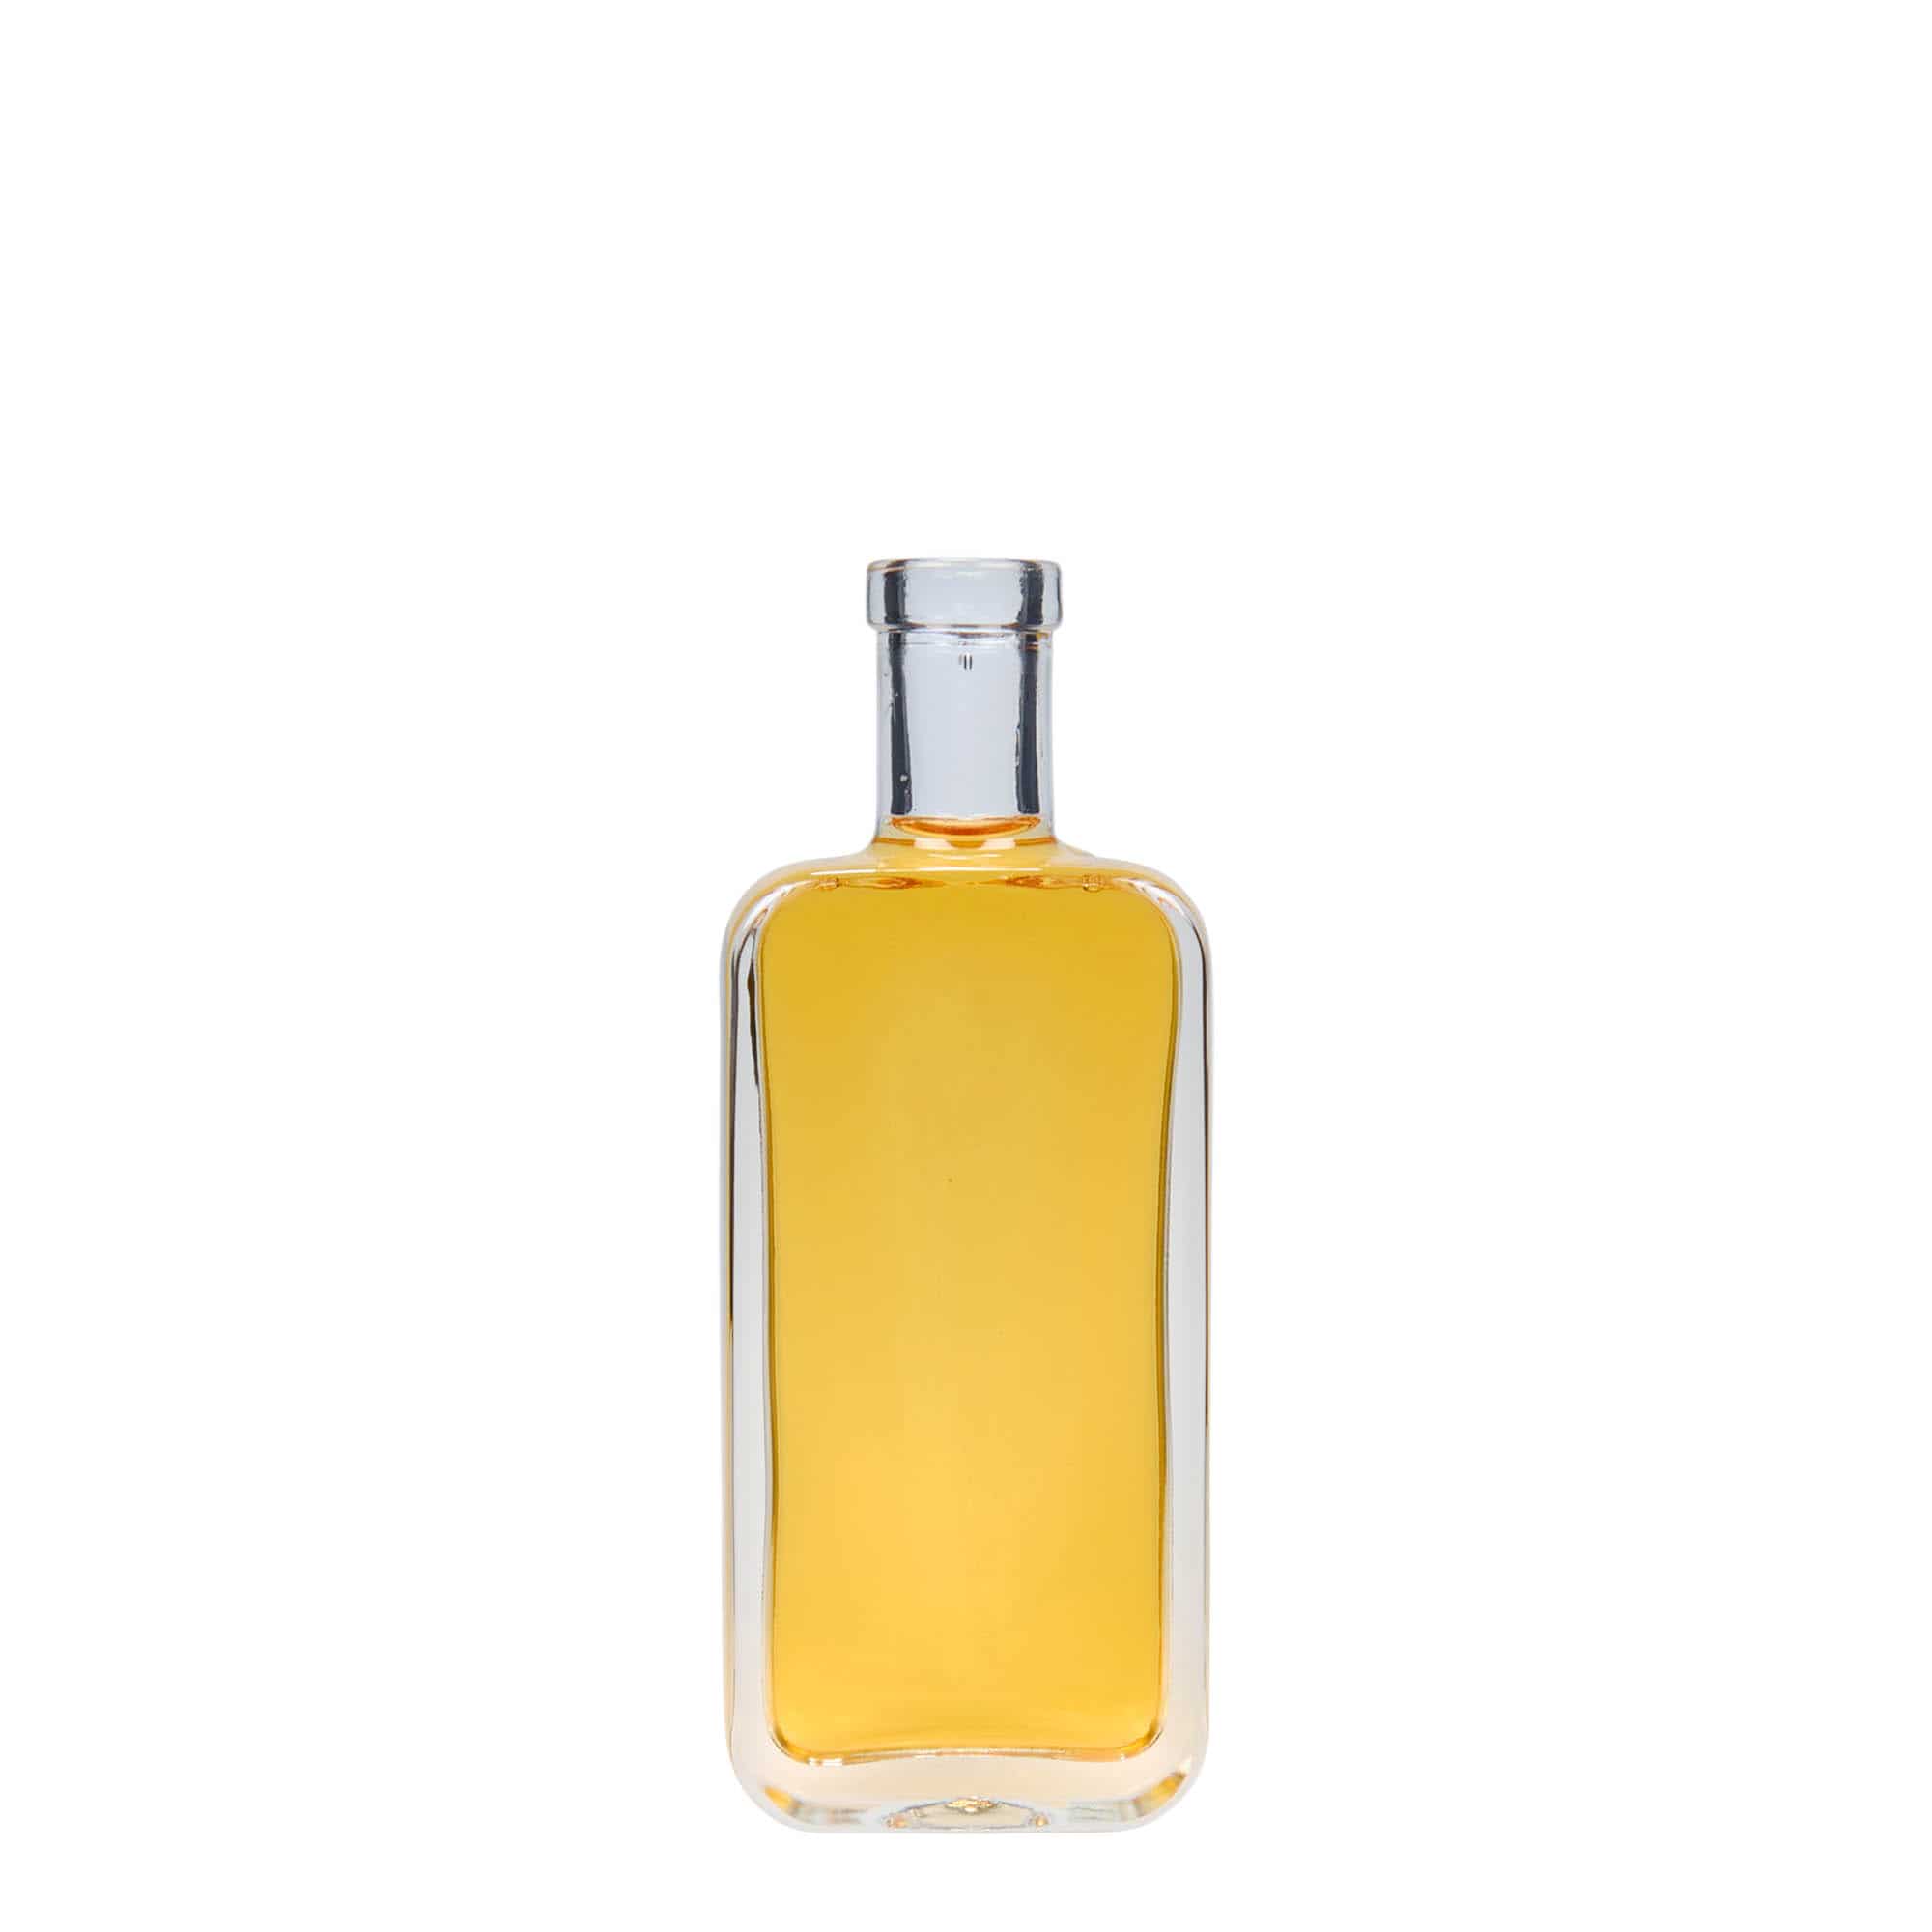 100 ml glass bottle 'Nice', rectangular, closure: cork